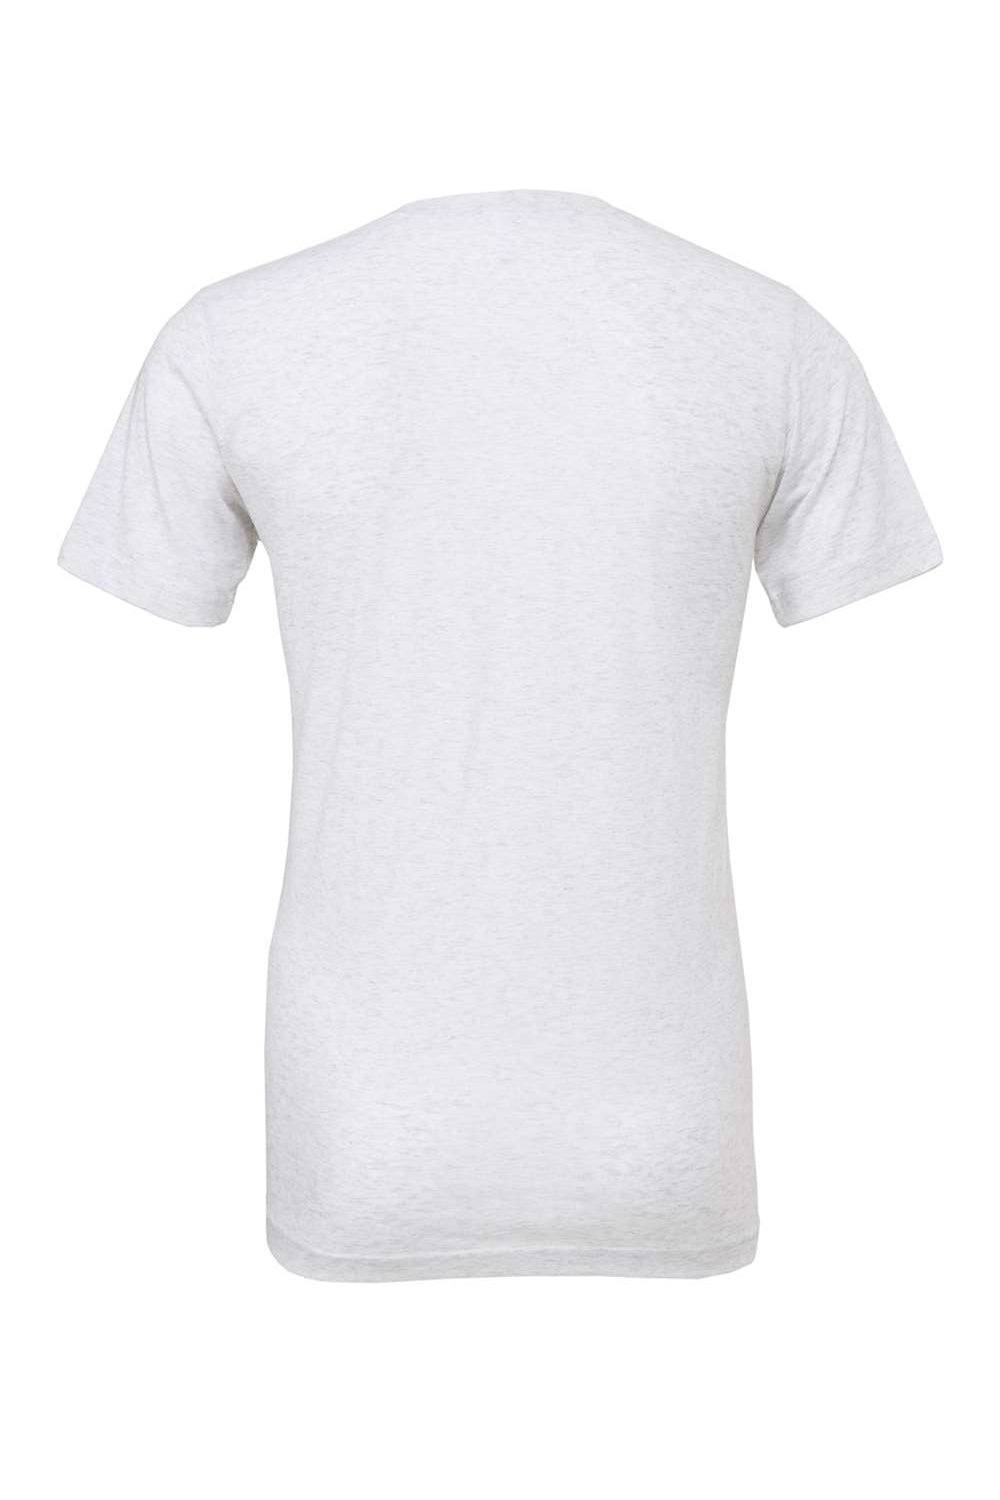 Bella + Canvas BC3001/3001C Mens Jersey Short Sleeve Crewneck T-Shirt Ash Grey Flat Back